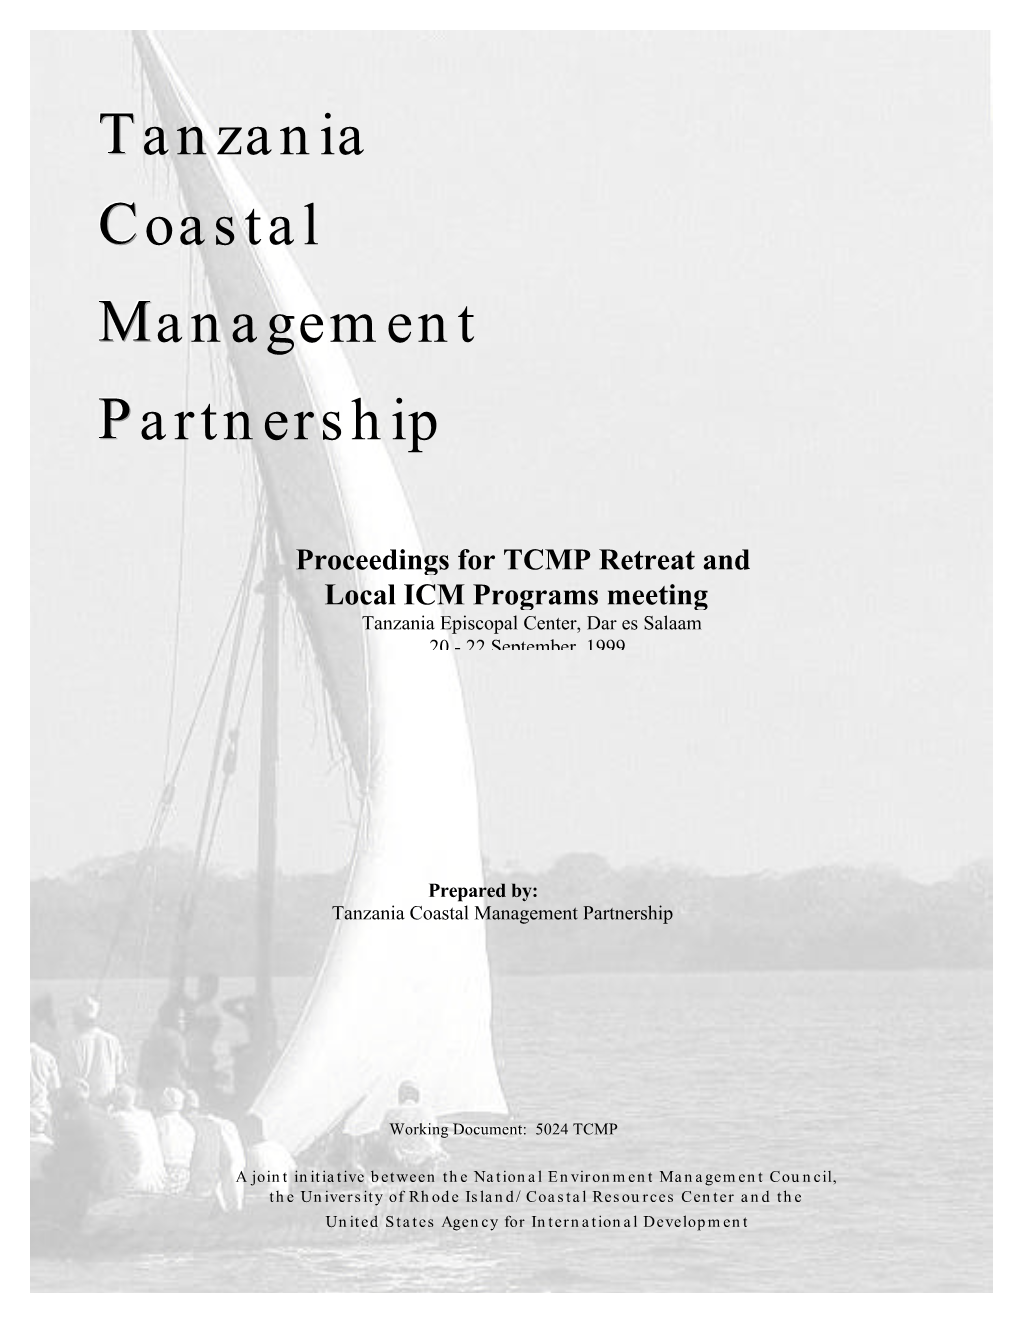 Tanzania Coastal Management Partnership